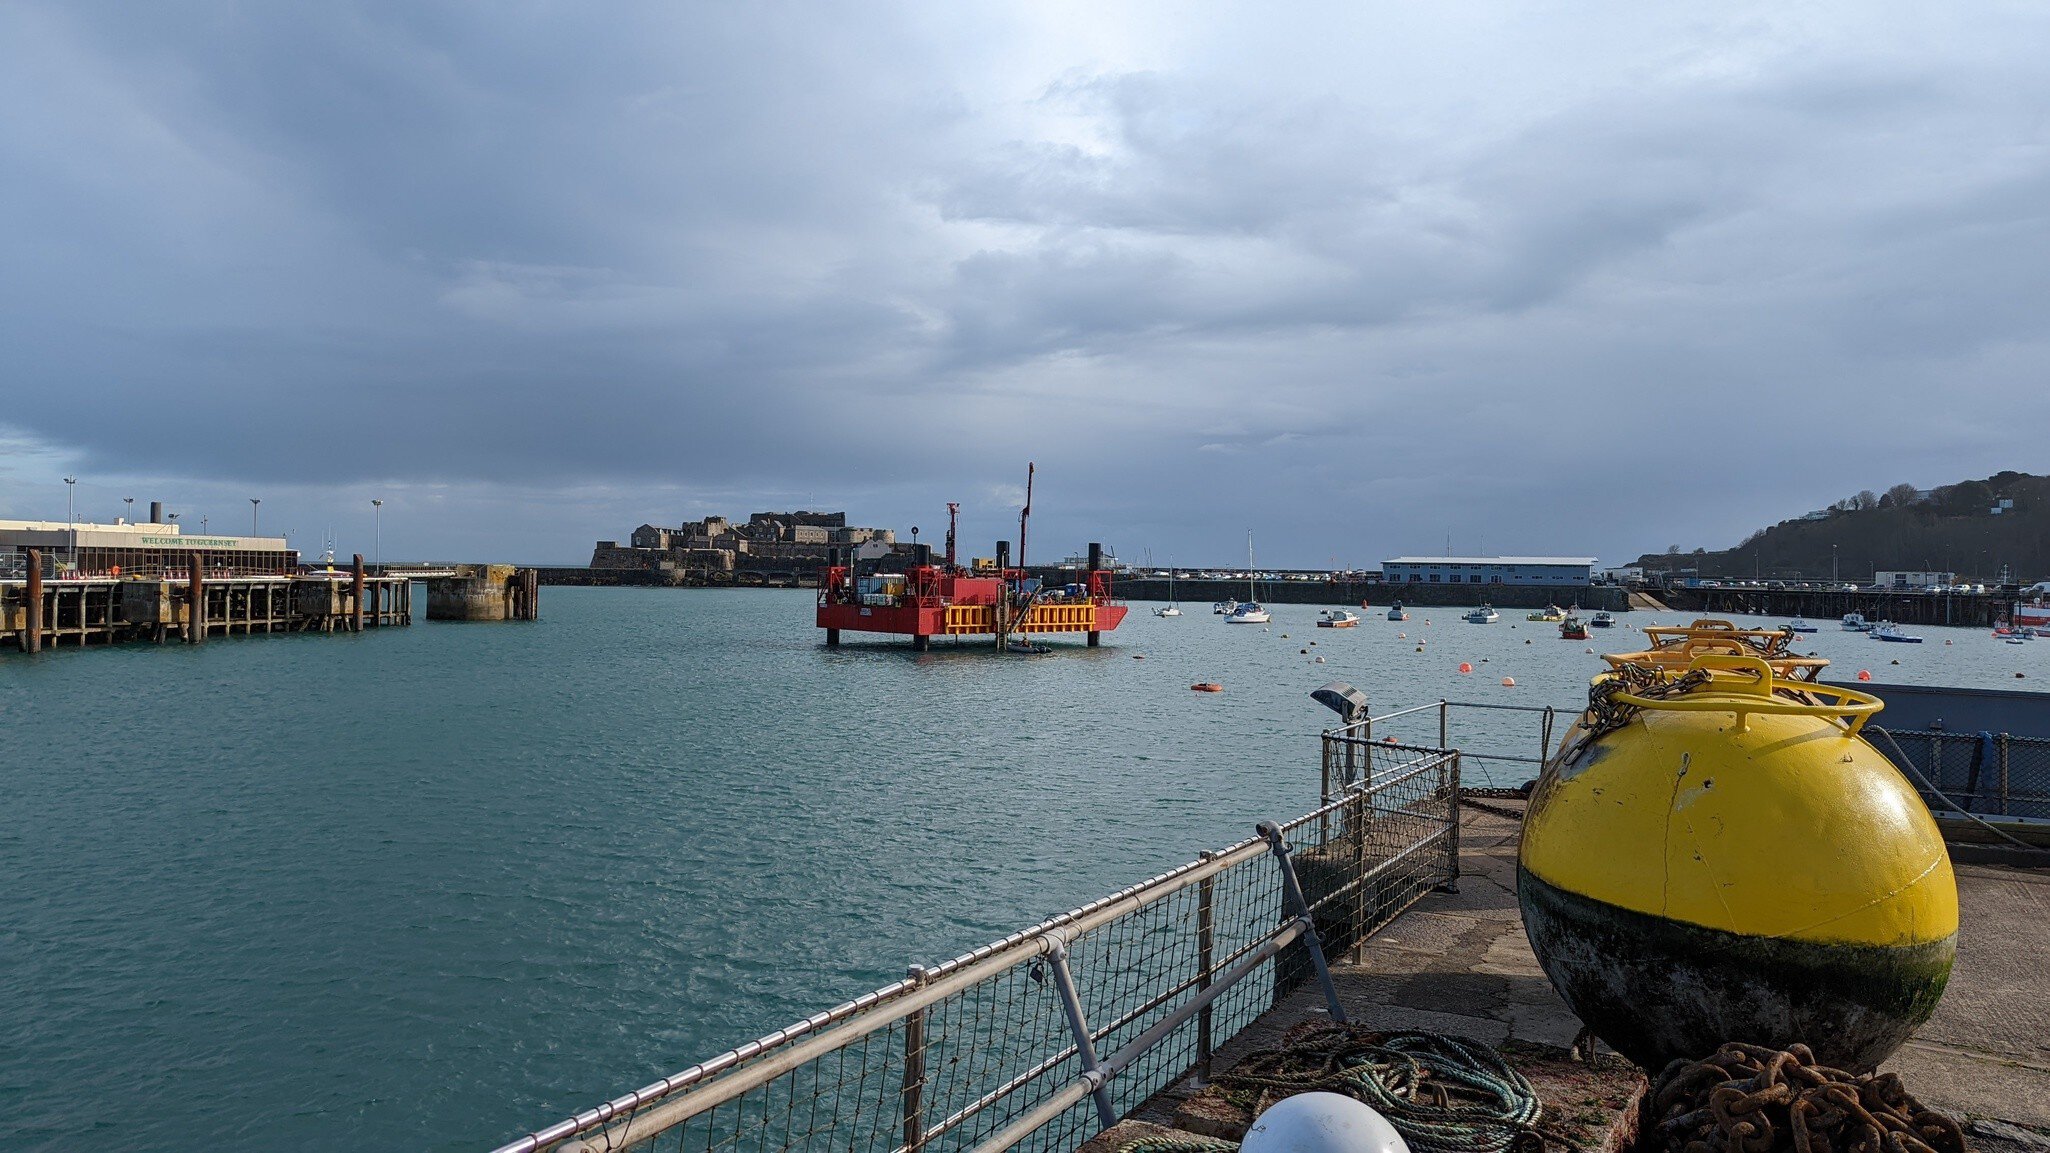 Aran 250 jack-up barge in Guersey port